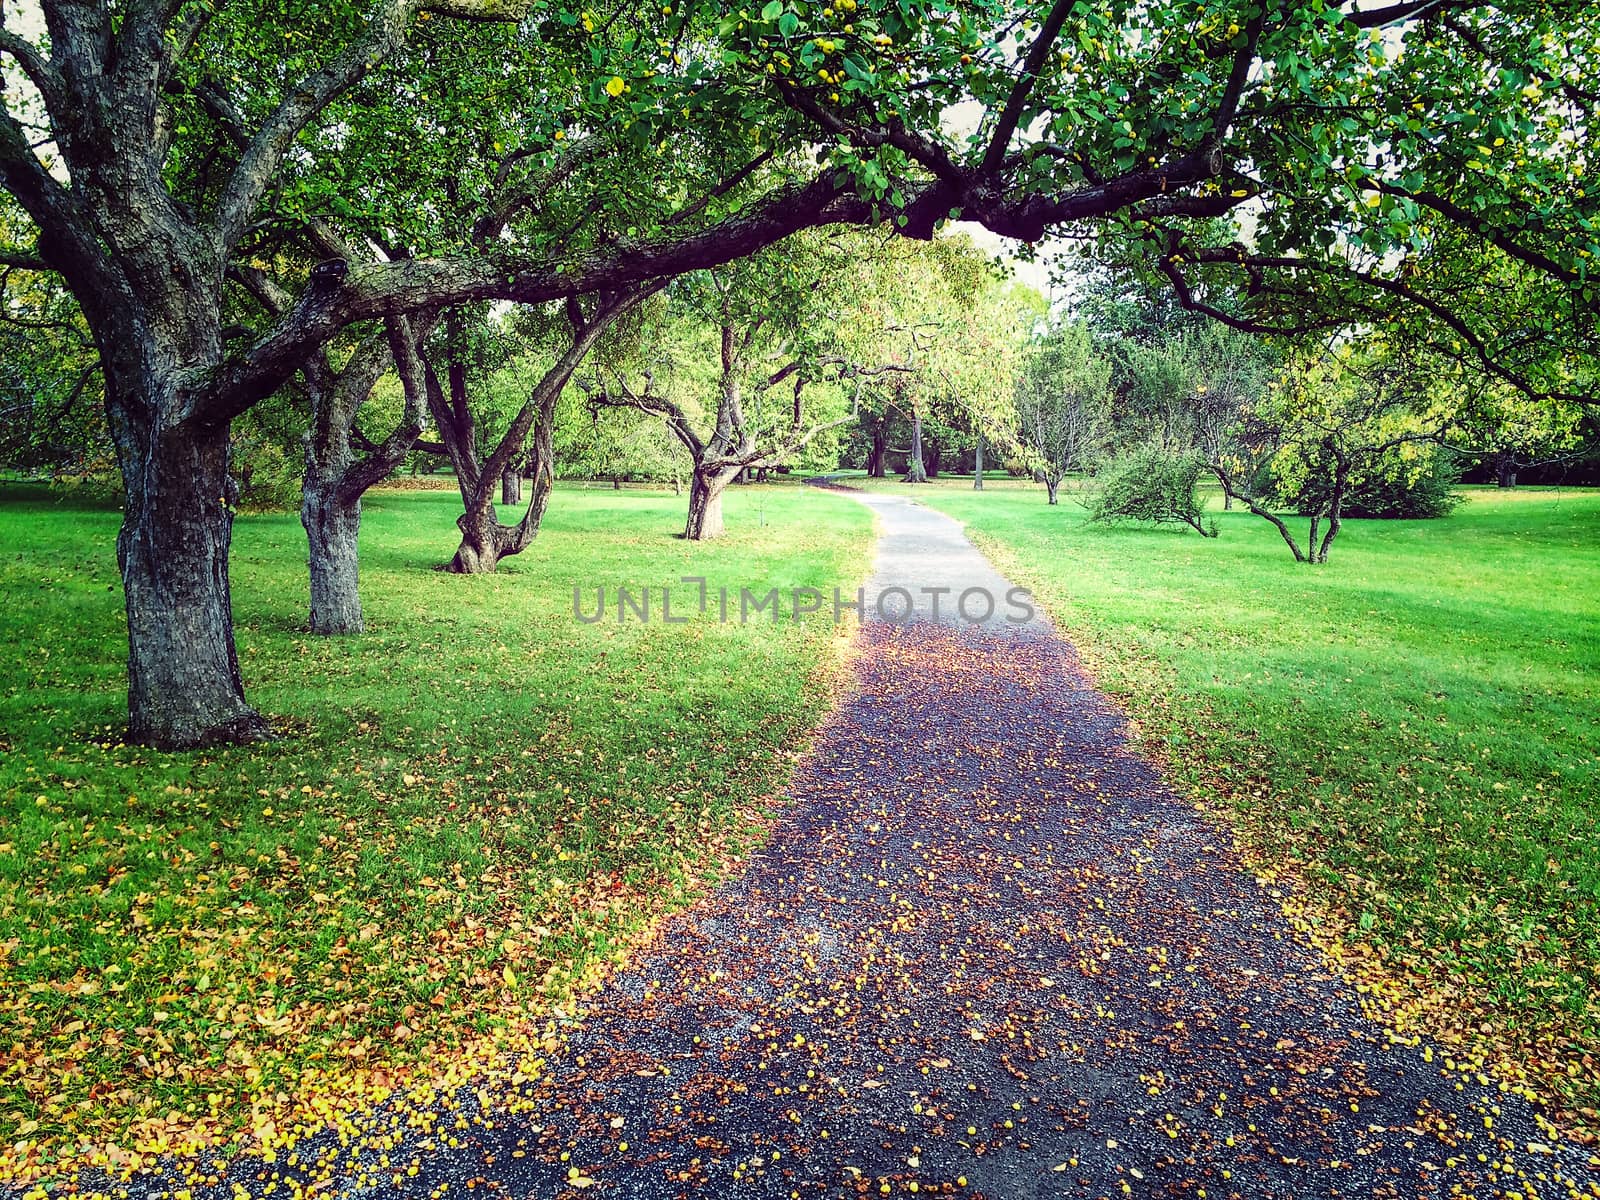 Early autumn in apple tree orchard by anikasalsera